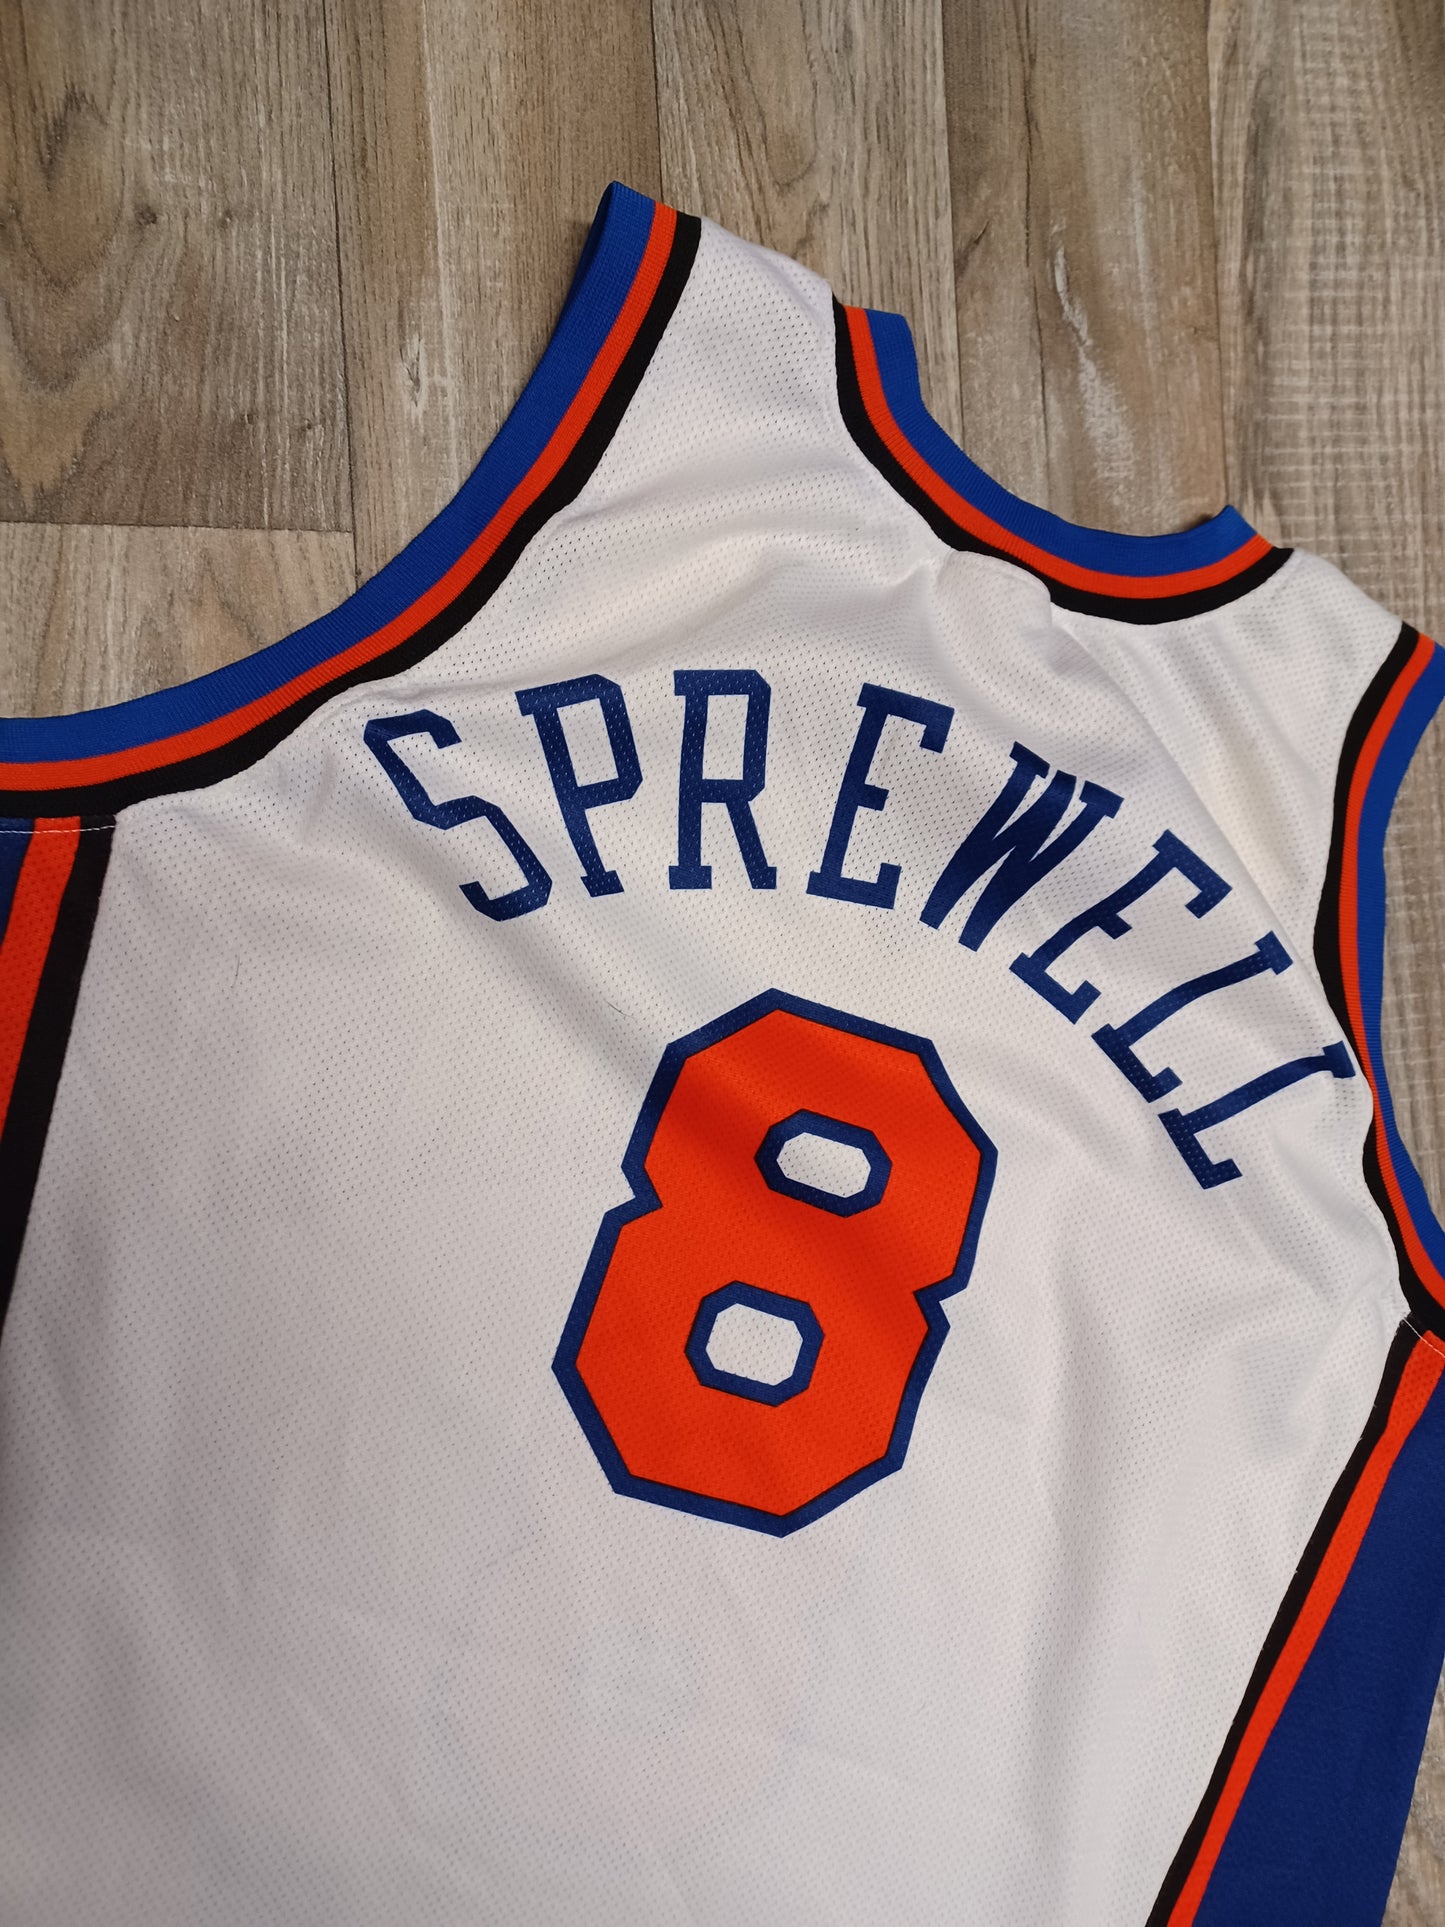 Latrell Sprewell New York Knicks Jersey Size Large